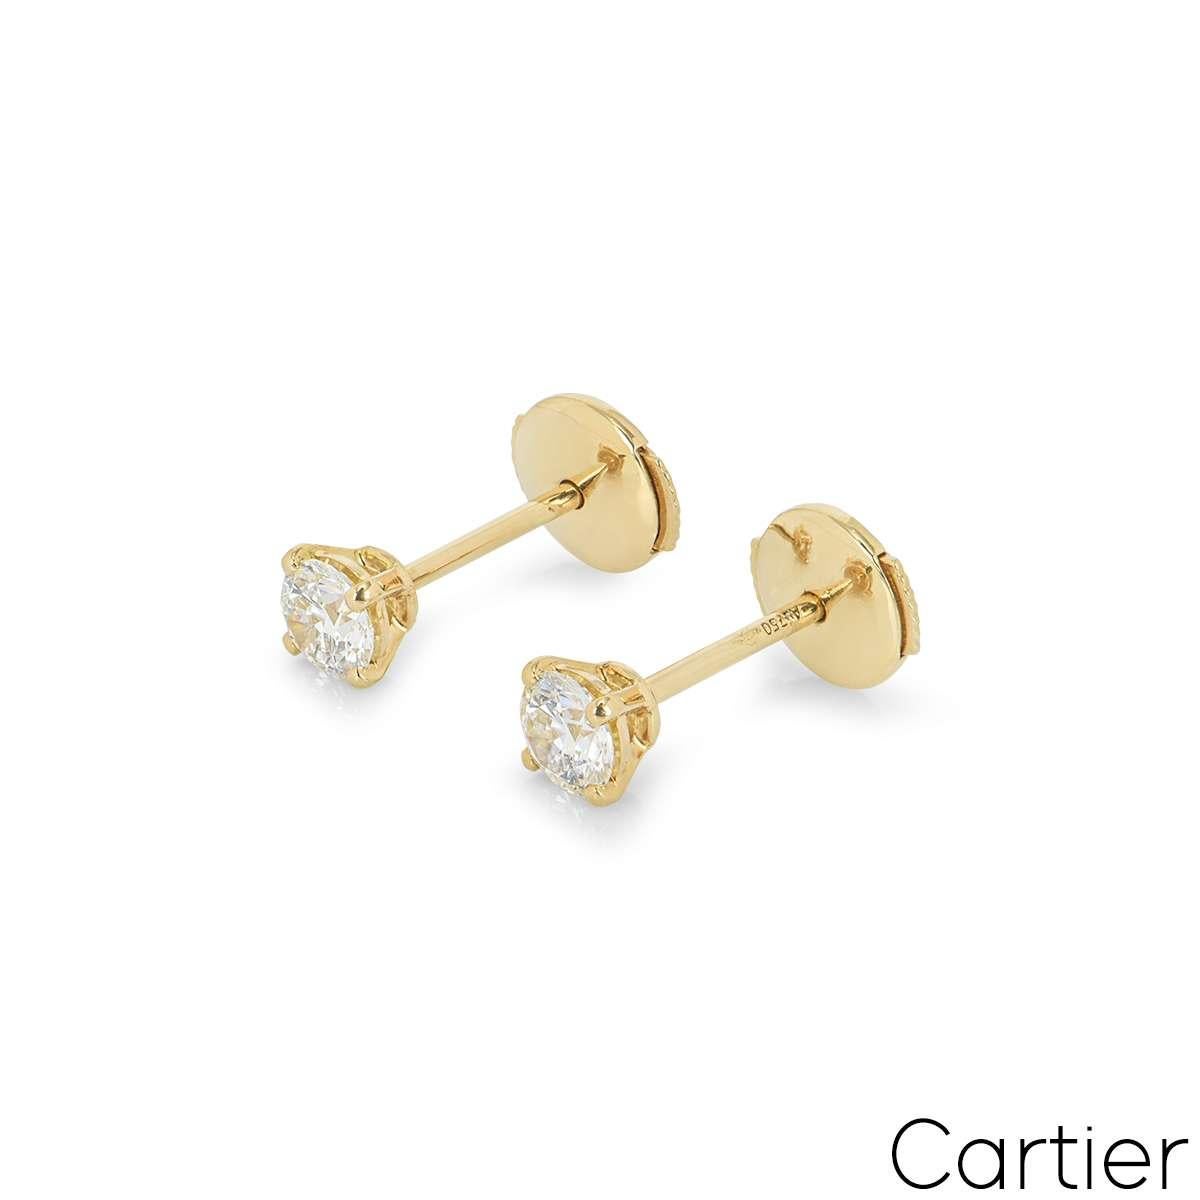 Round Cut Cartier Yellow Gold Diamond Stud Earrings 0.46ct G/VVS1 GIA Certified